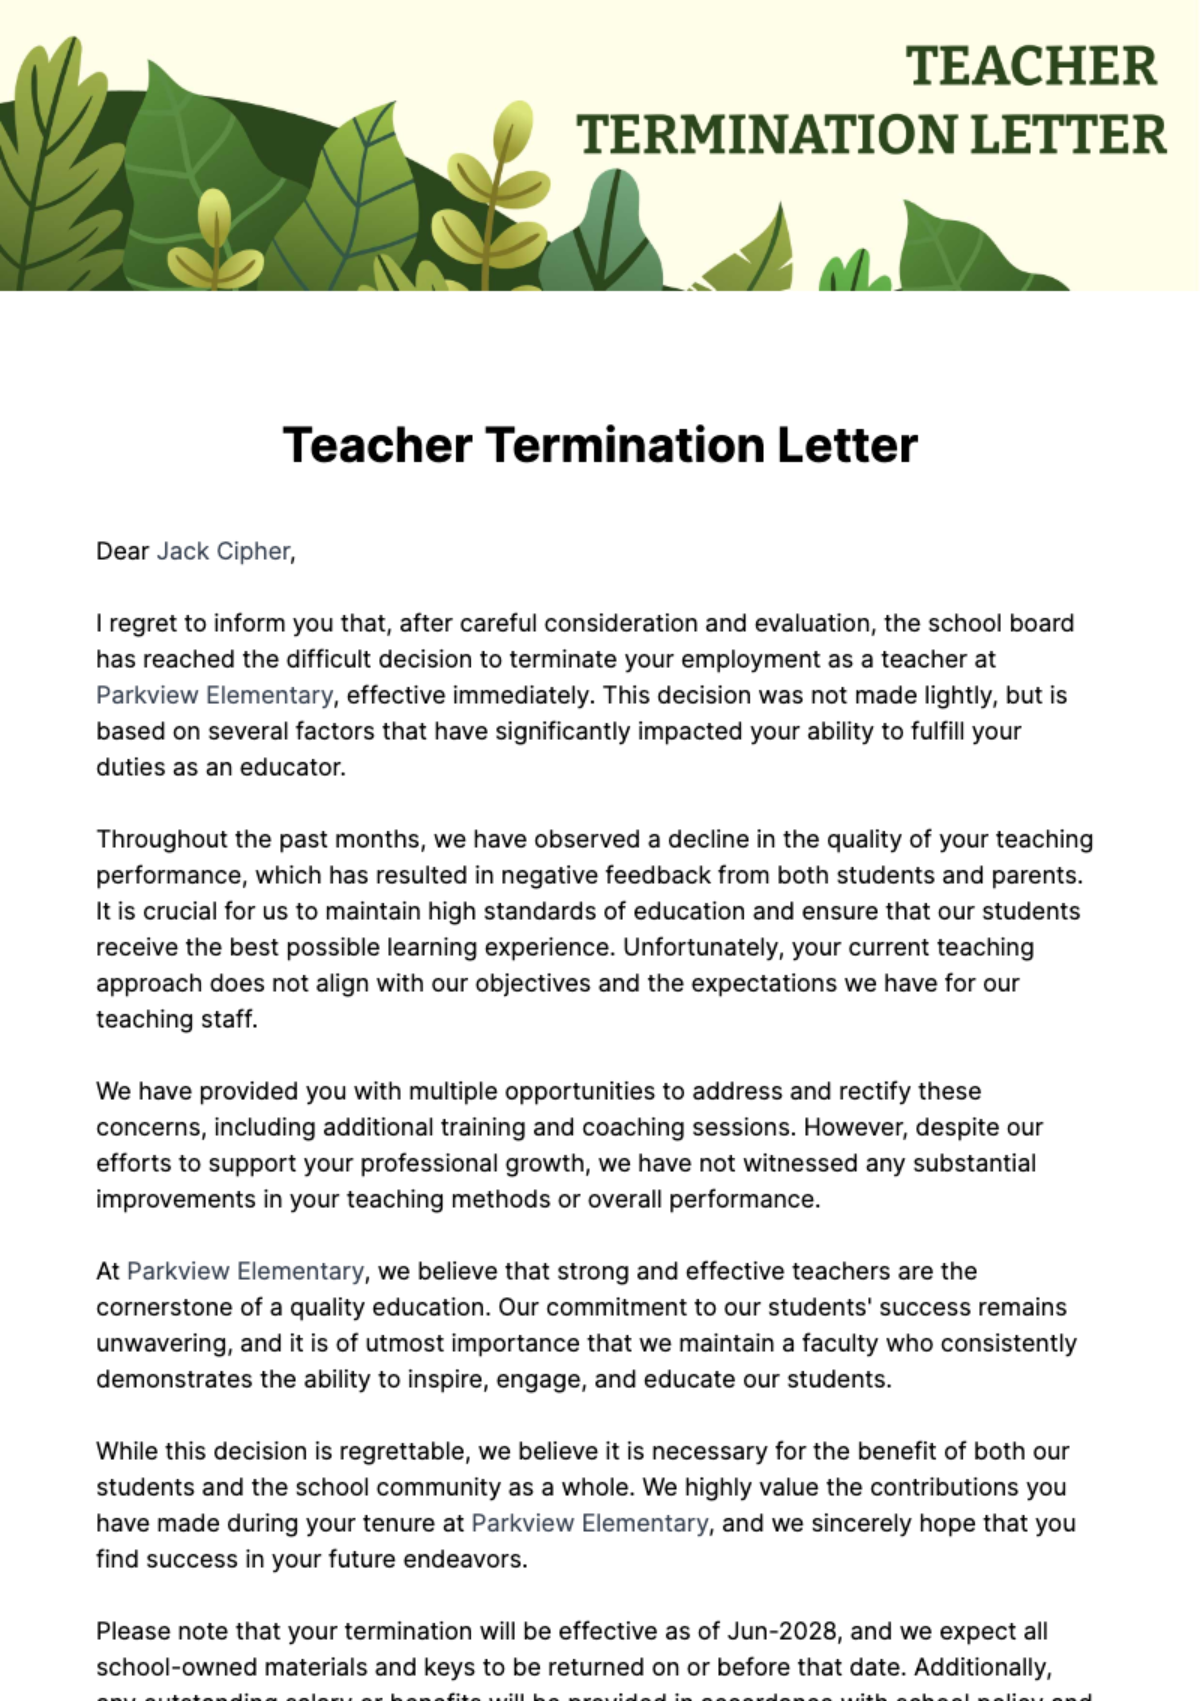 Teacher Termination Letter Template